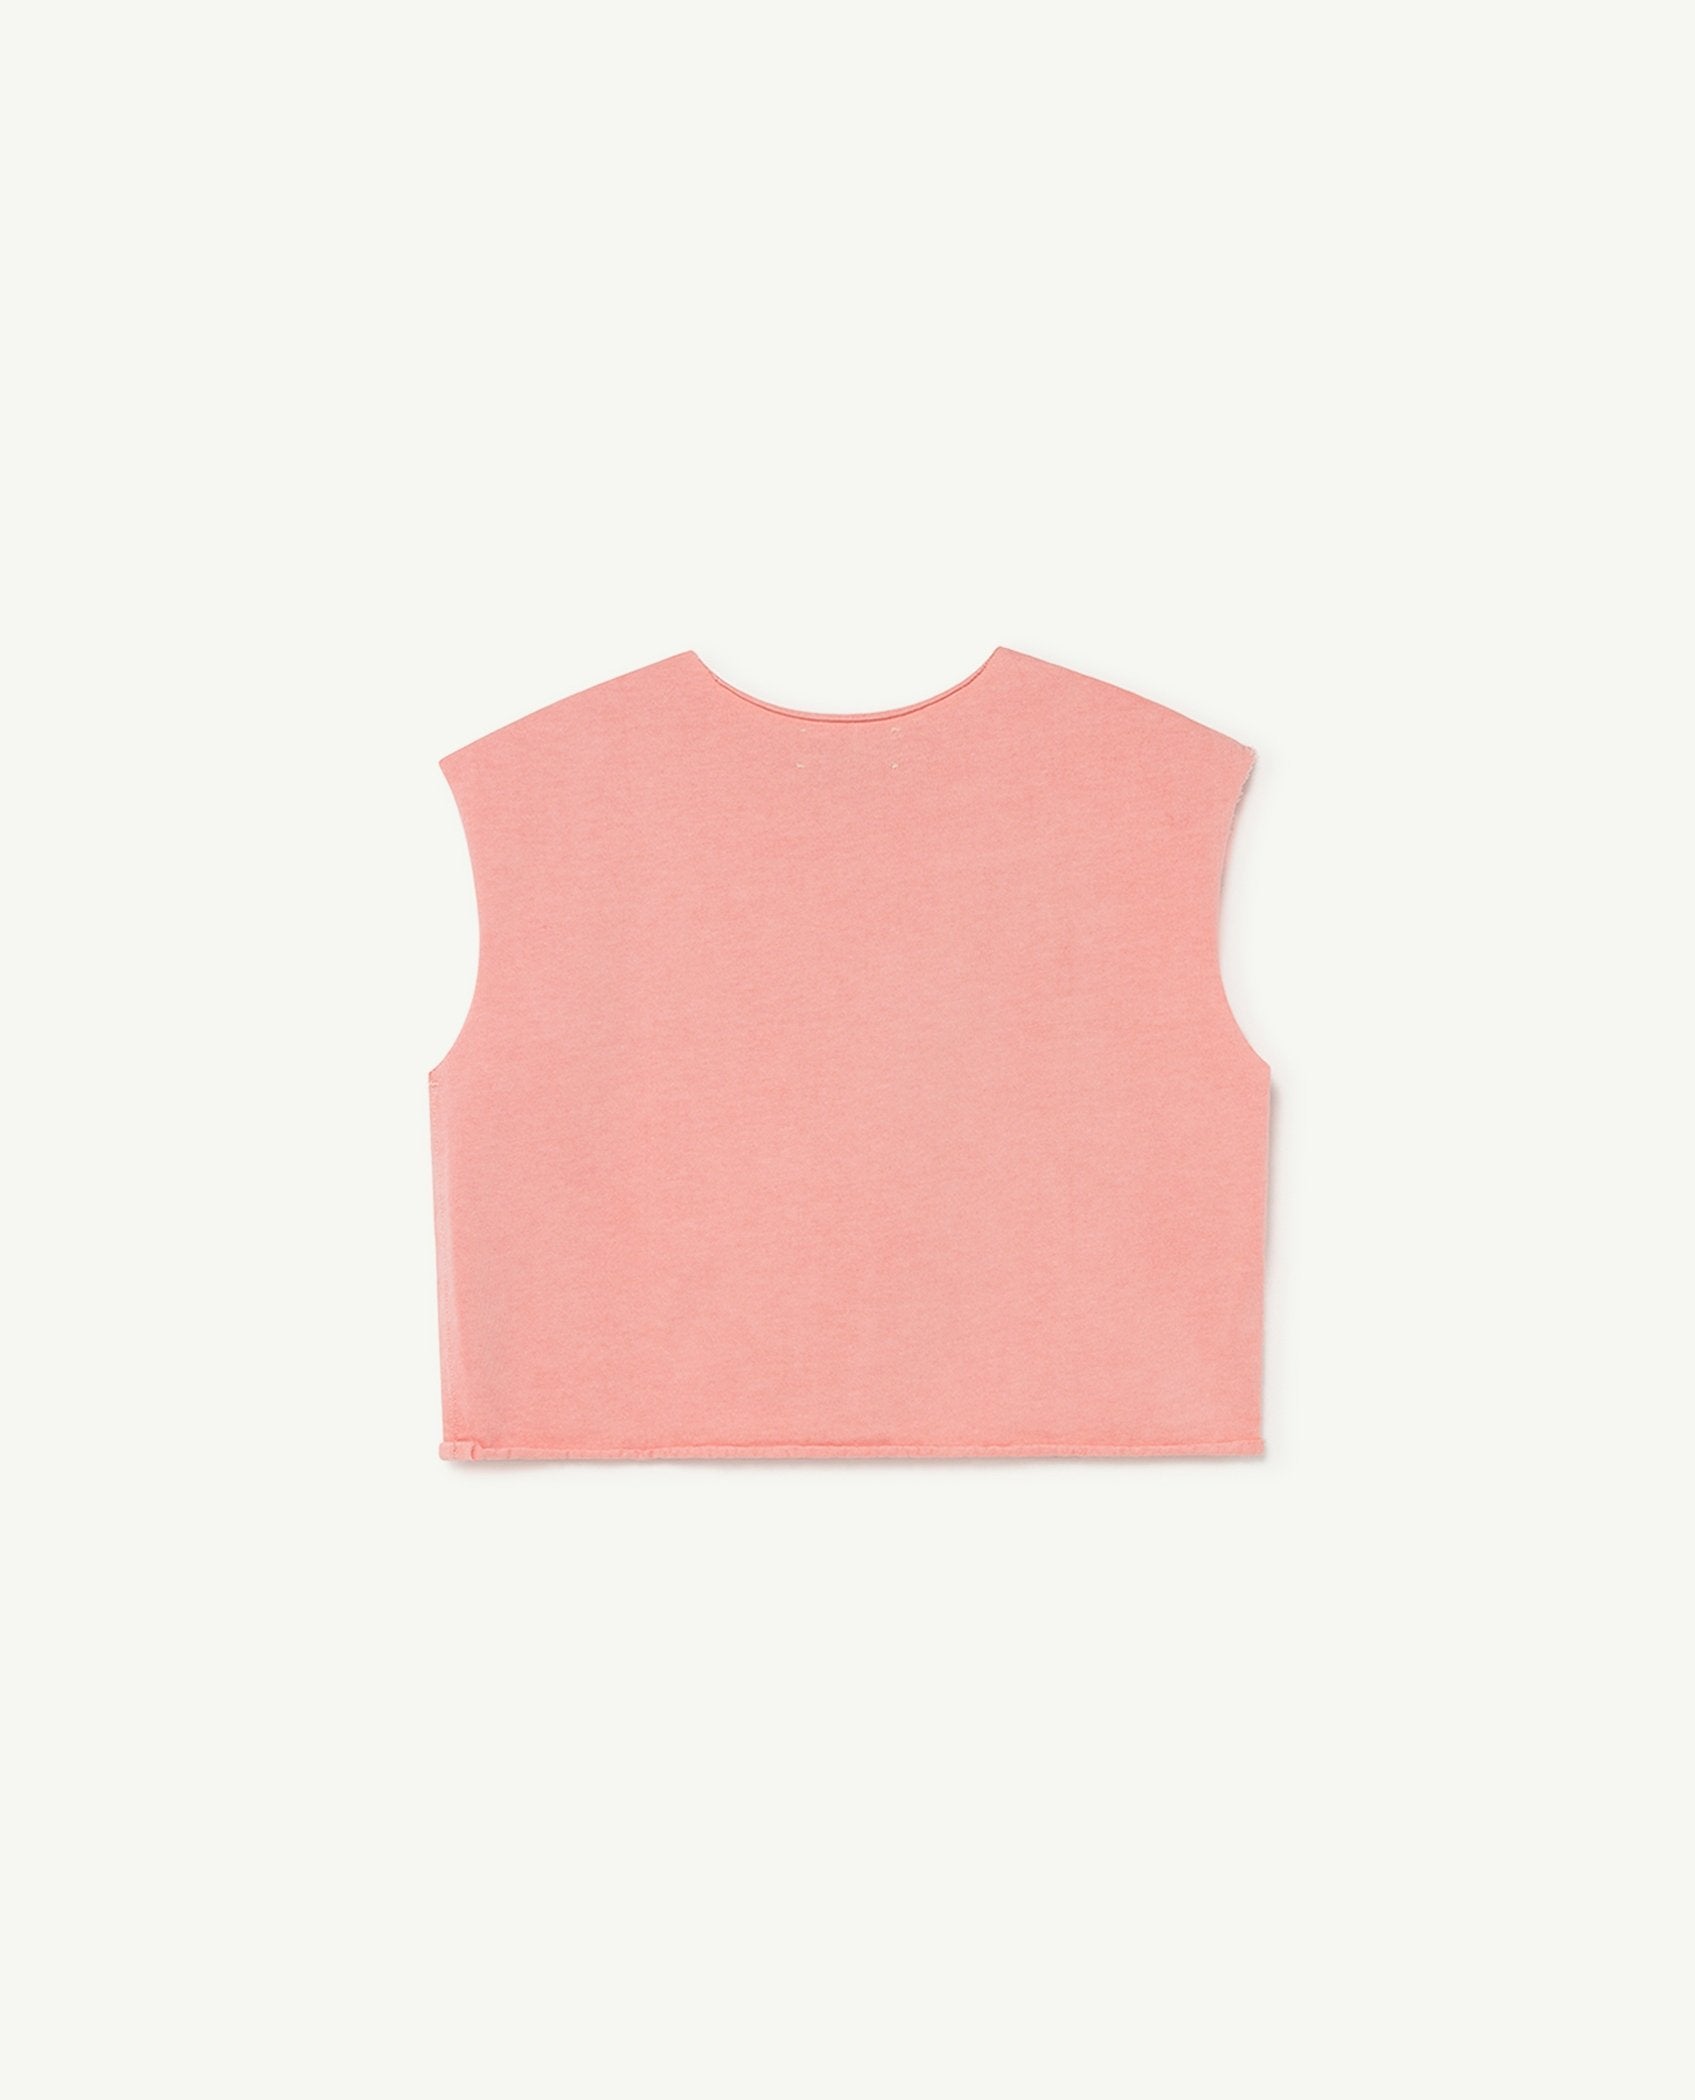 Soft Pink Los Animales Prawn T-Shirt PRODUCT BACK